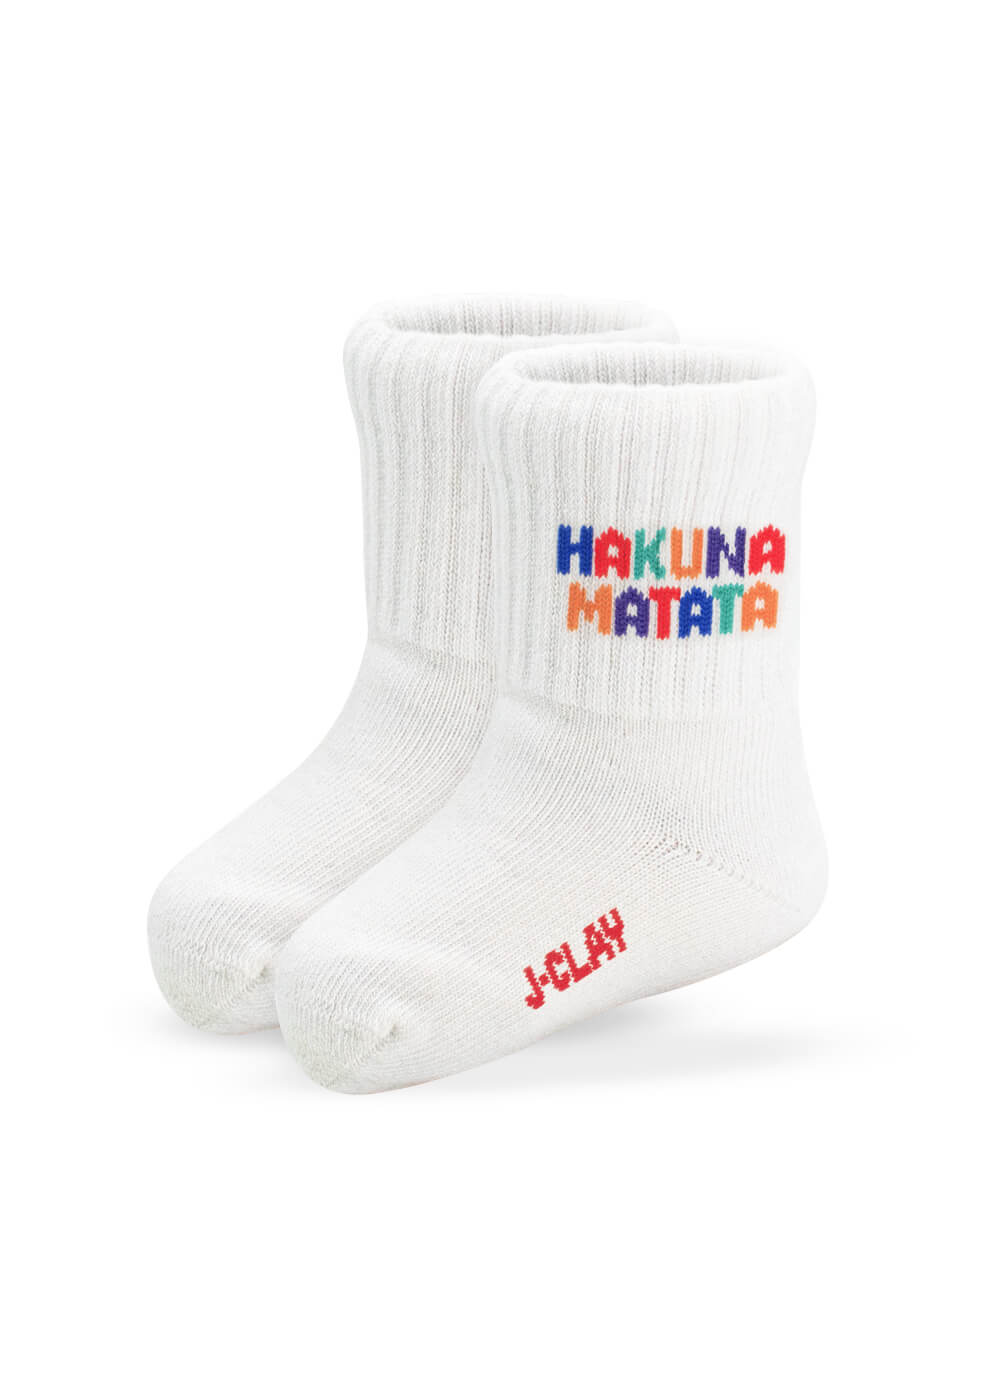 Hakuna Matata - Fam Pack